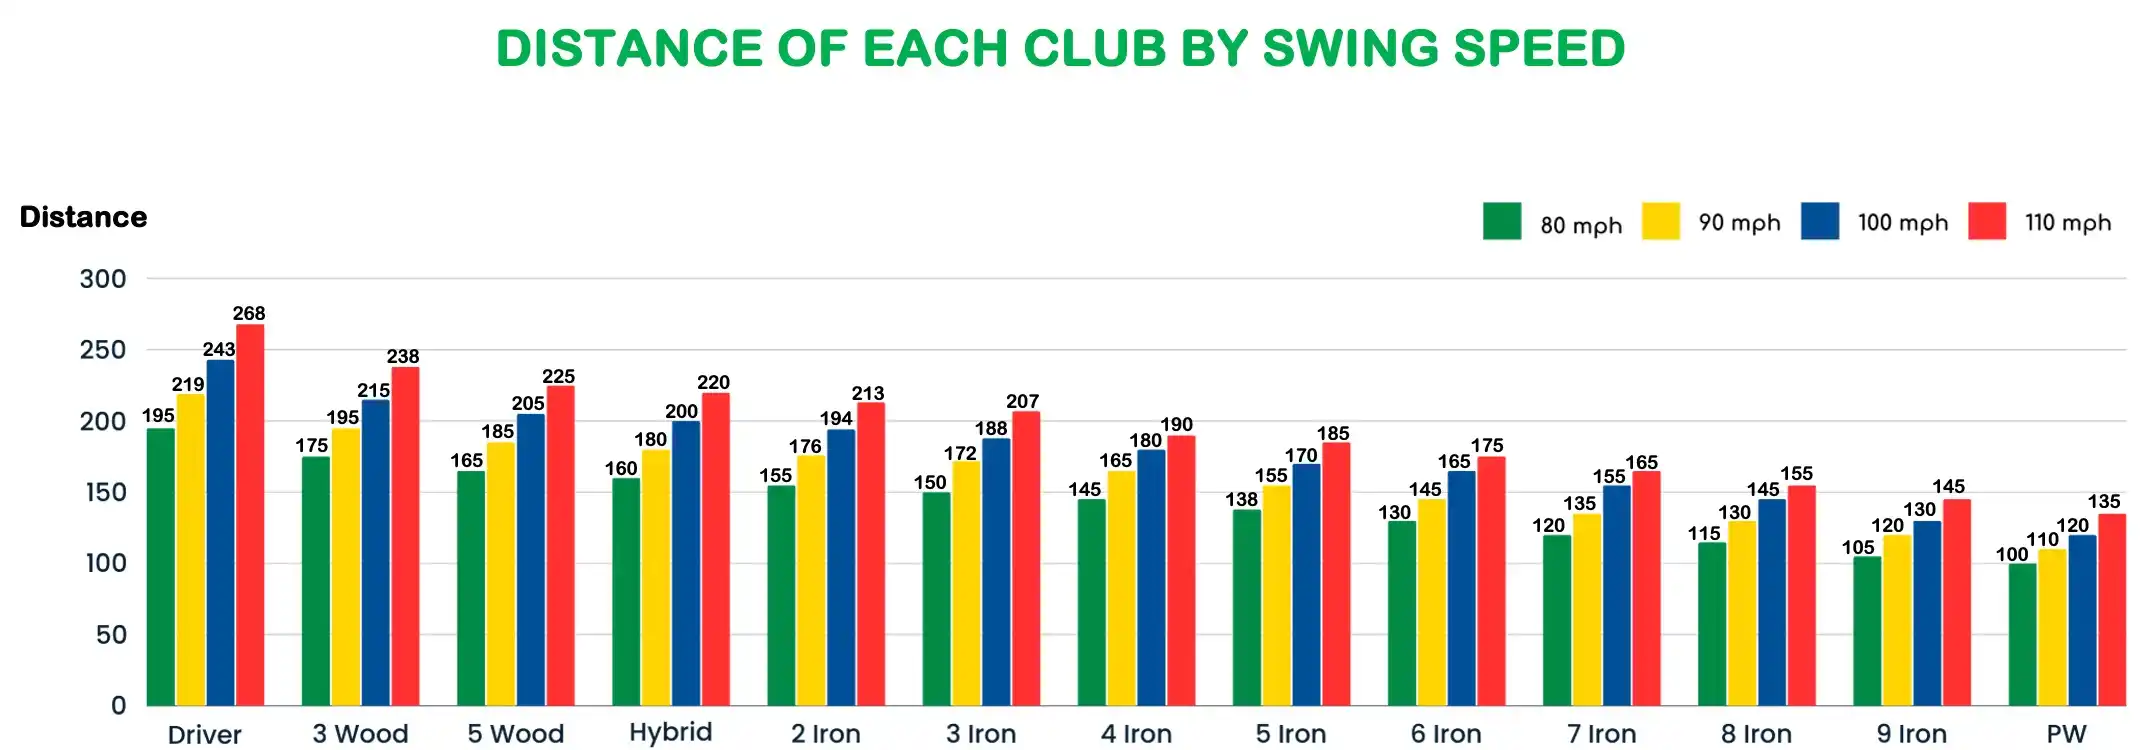 pga tour player average distance per club